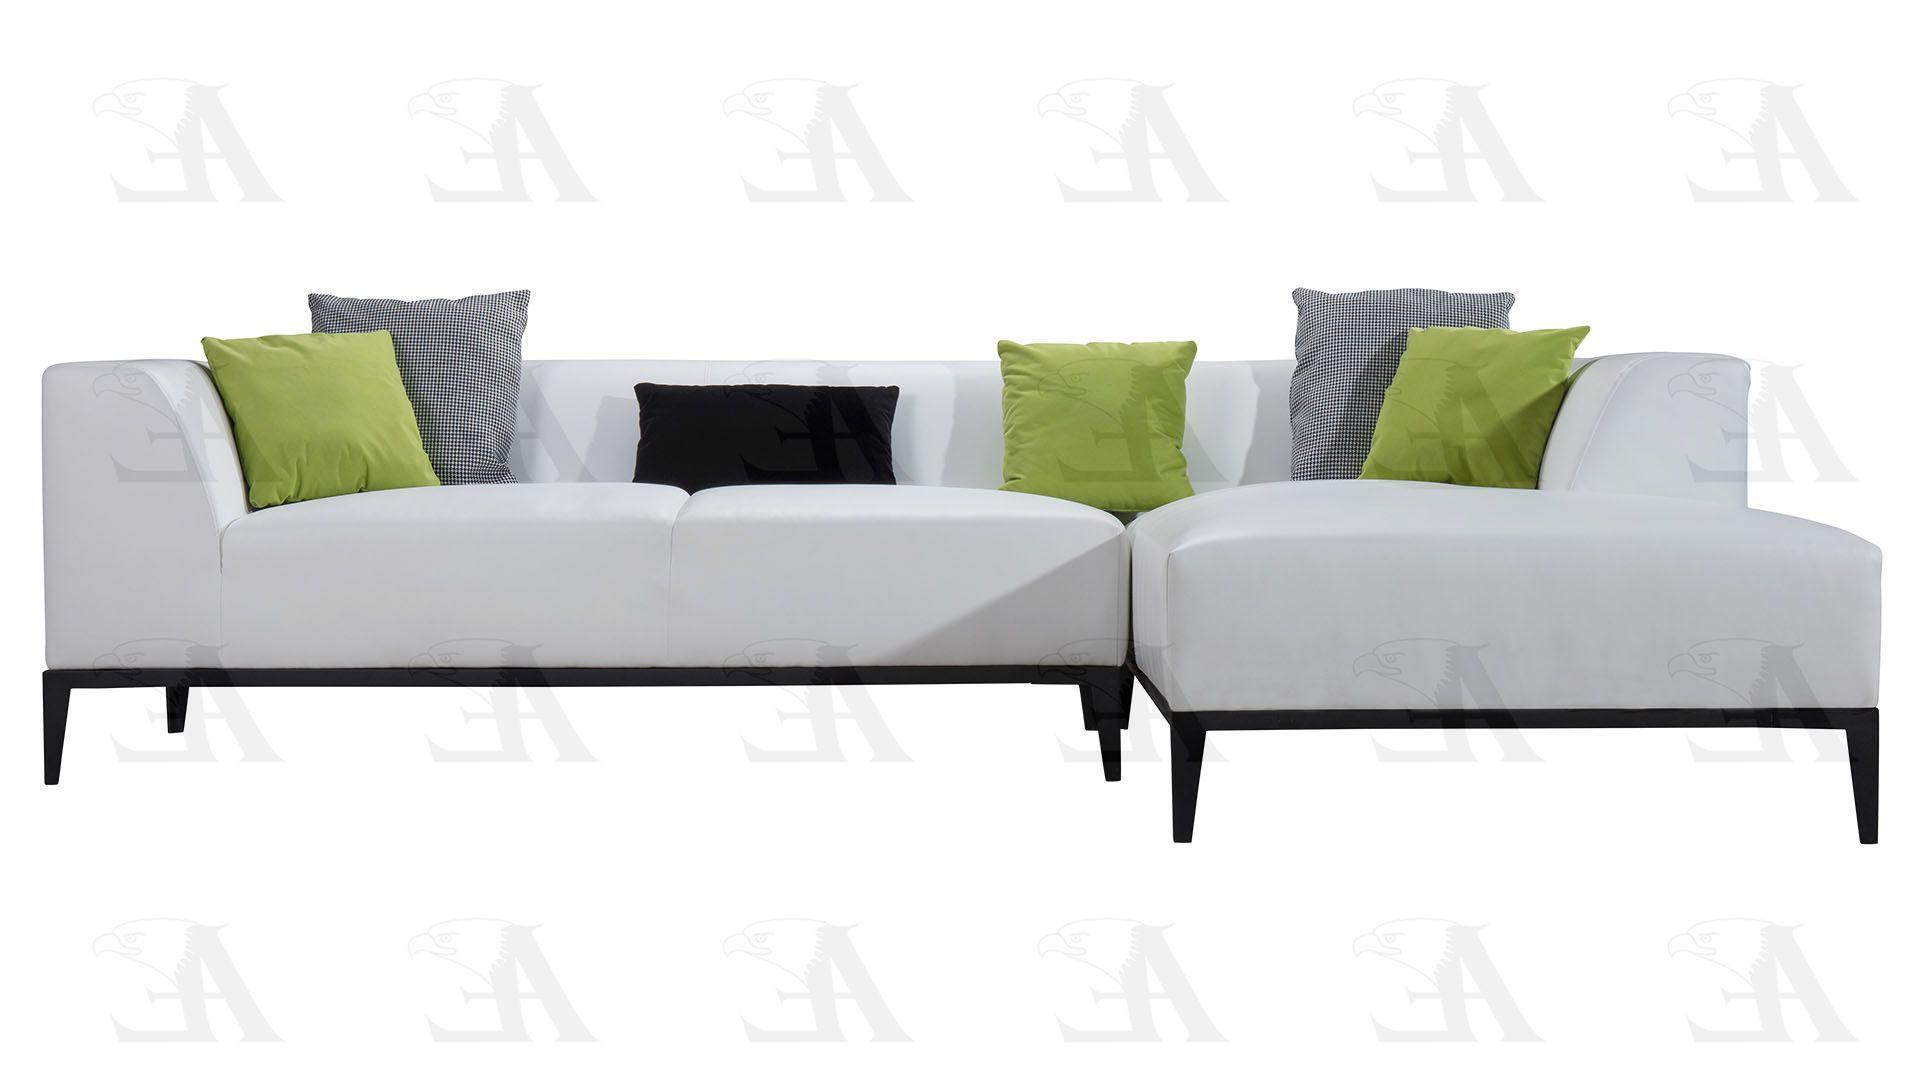 

    
American Eagle Furniture AE-LD818-W Sofas and Chaise White AE-LD818-W Set-3 RHC
